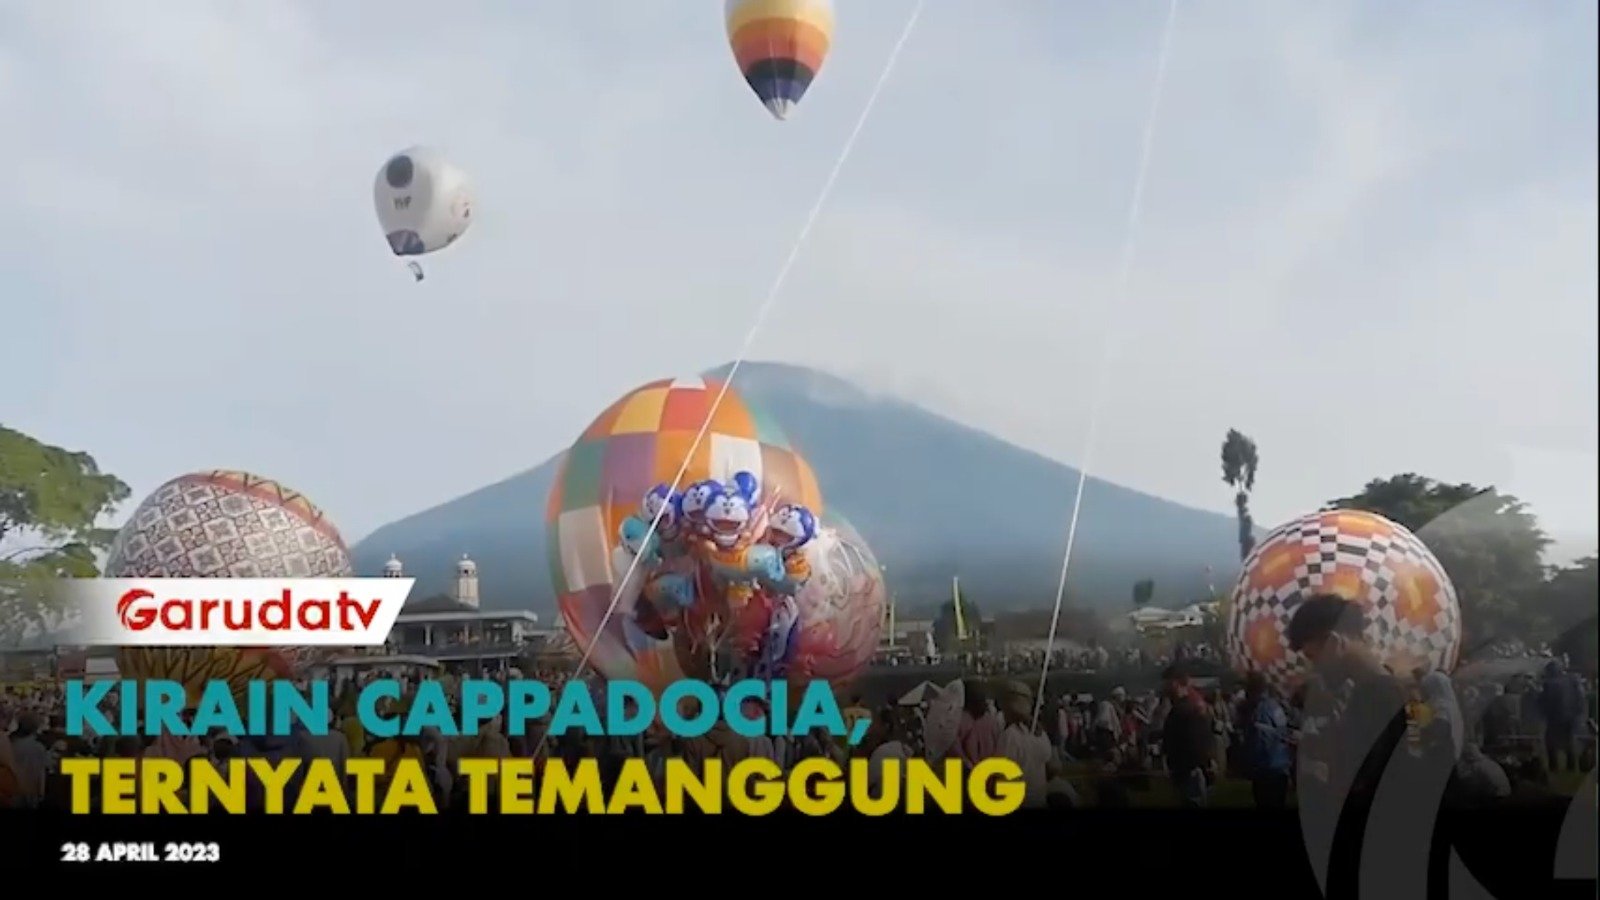 Bukan di Luar Negeri, Festival Balon Udara Ini Ada di Wonososbo Temanggung